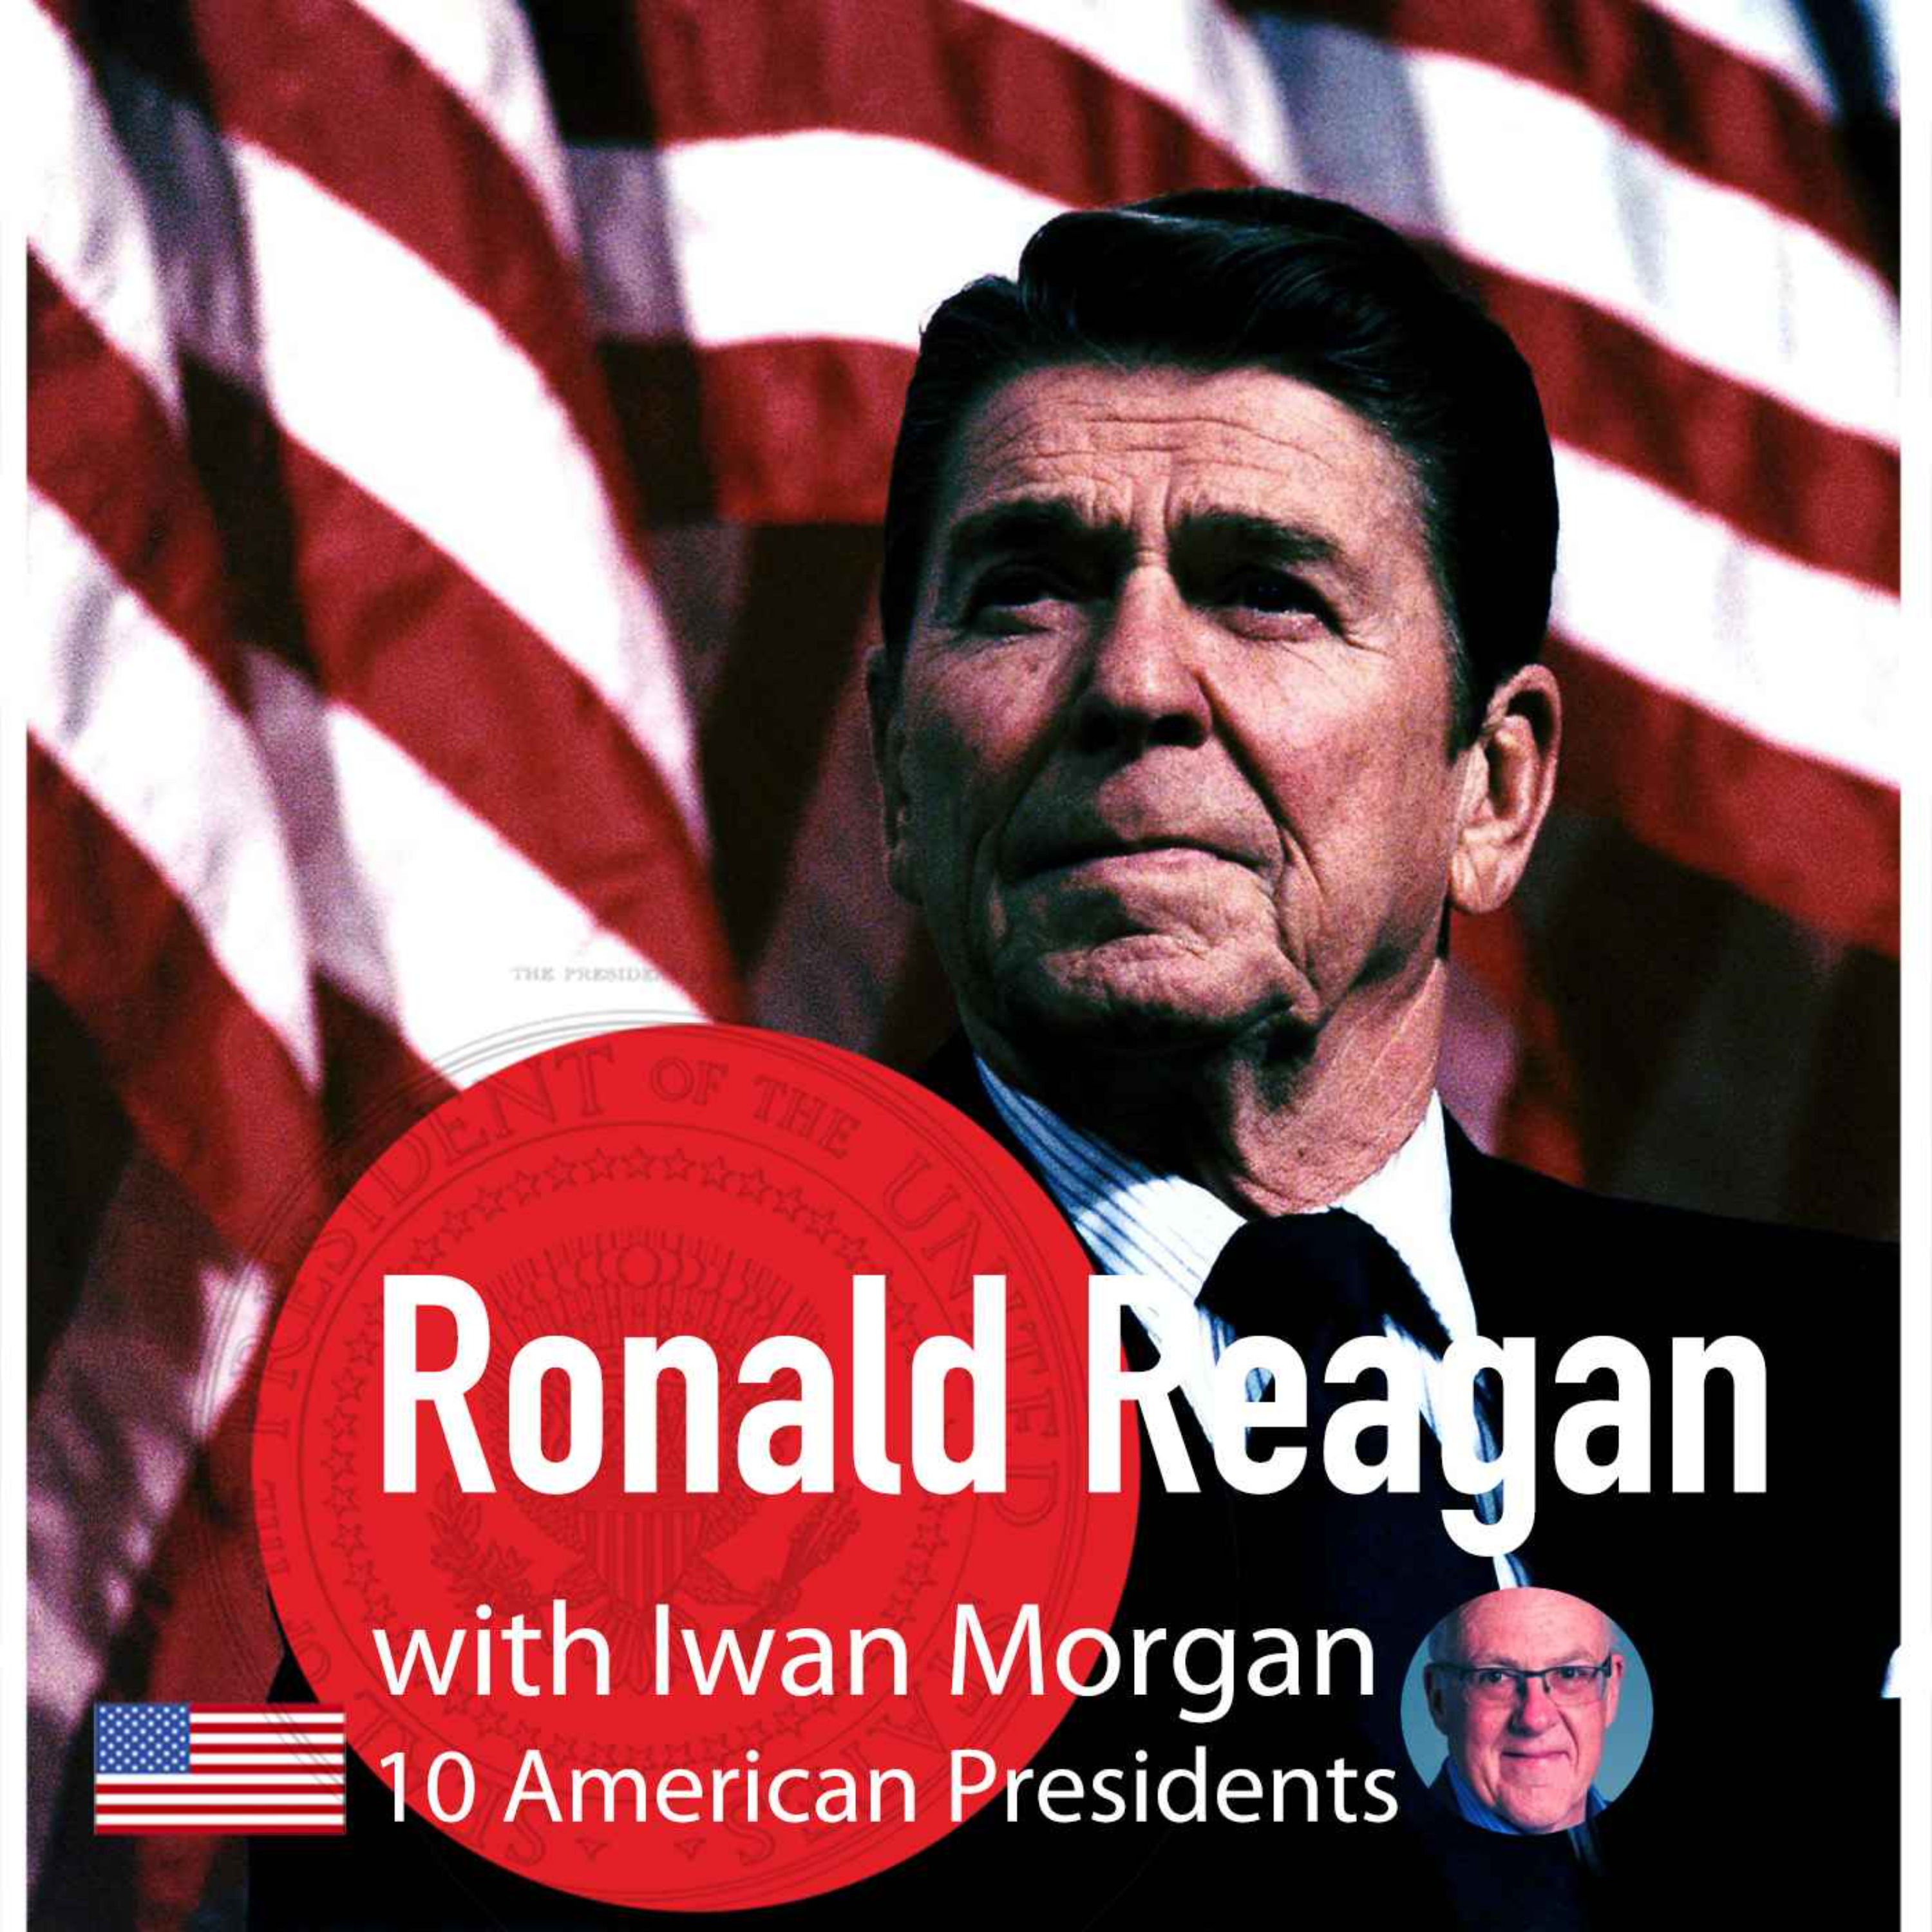 Tearing Down Walls: Reagan's End Game